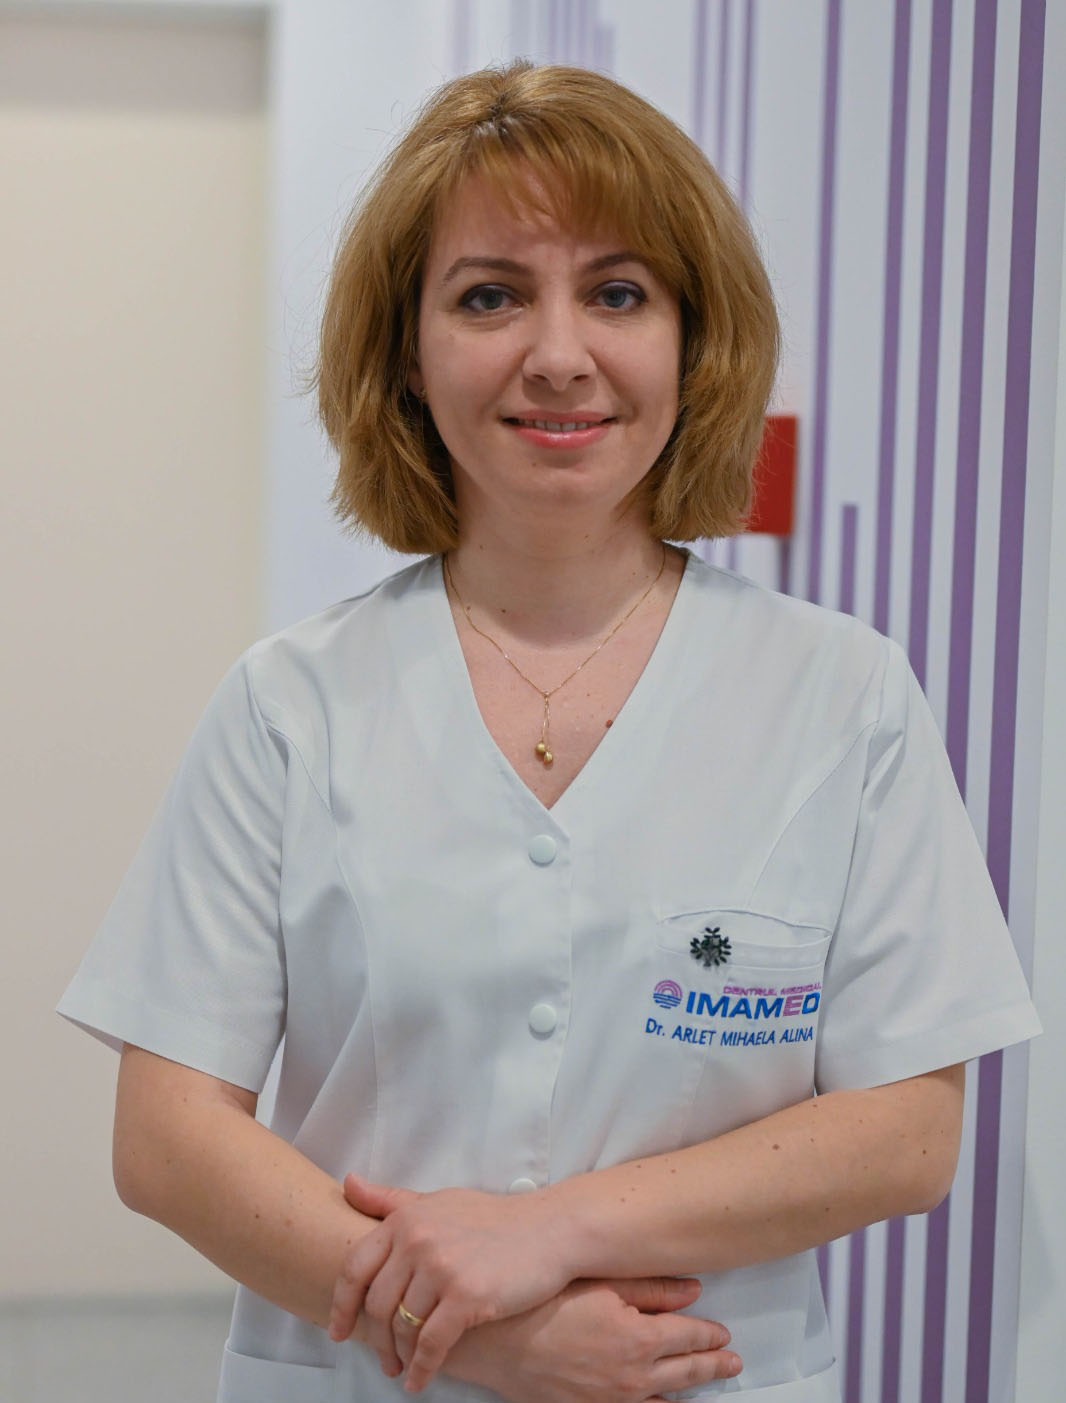 Dr. Arlet Alina